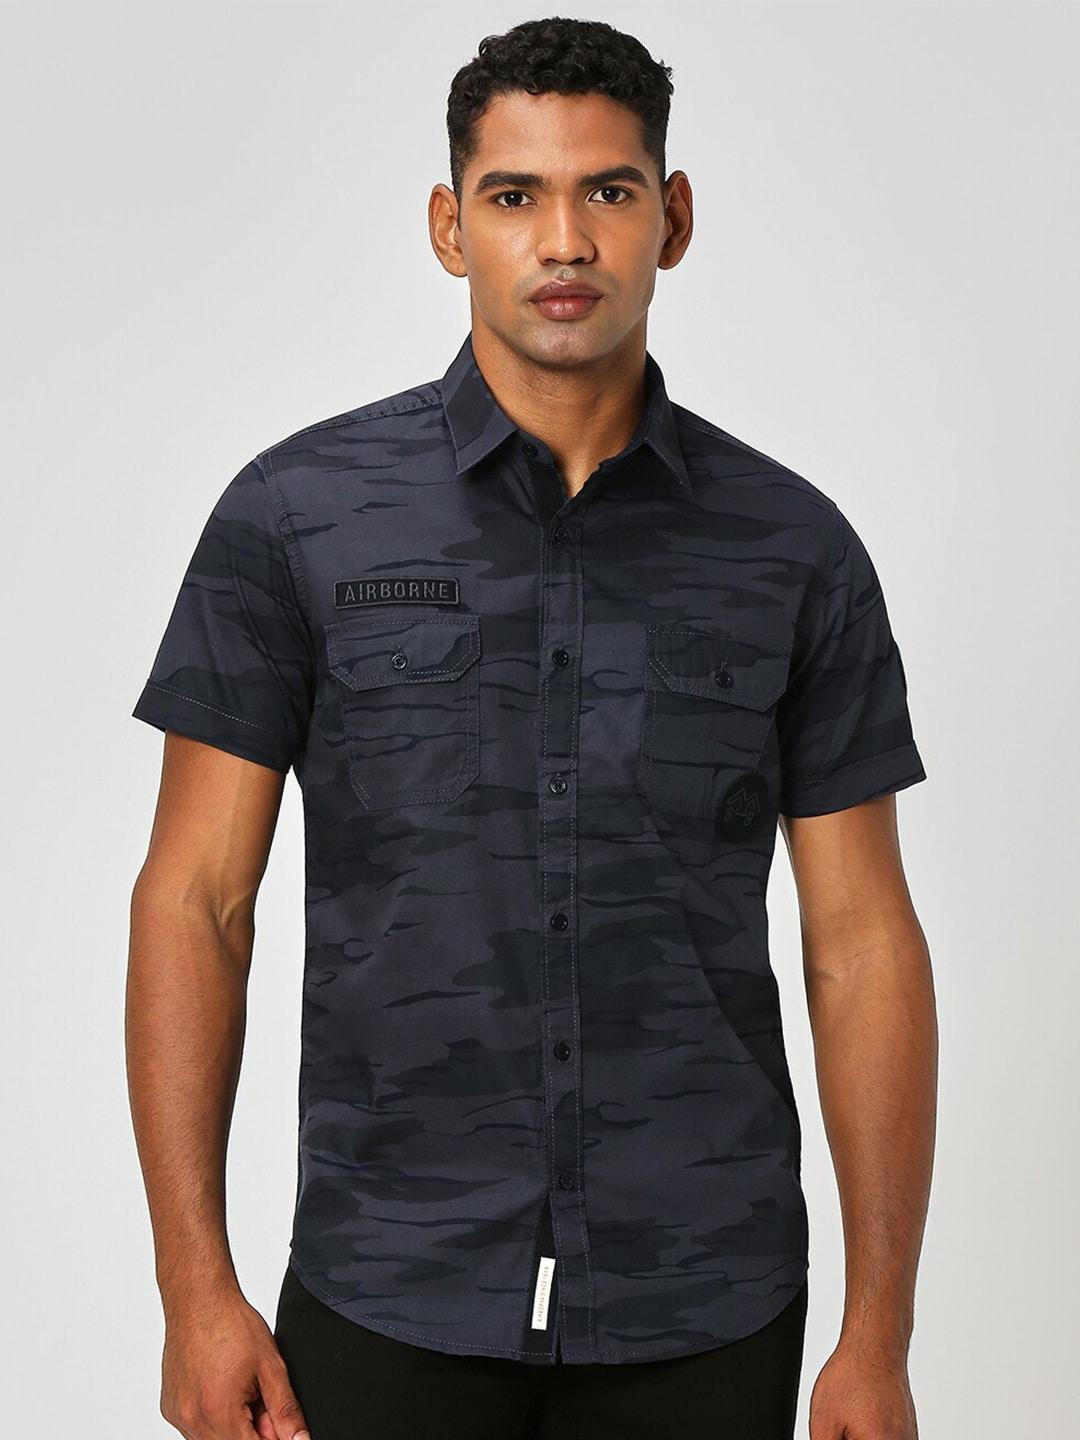 mufti-men-black-slim-fit-opaque-printed-casual-shirt